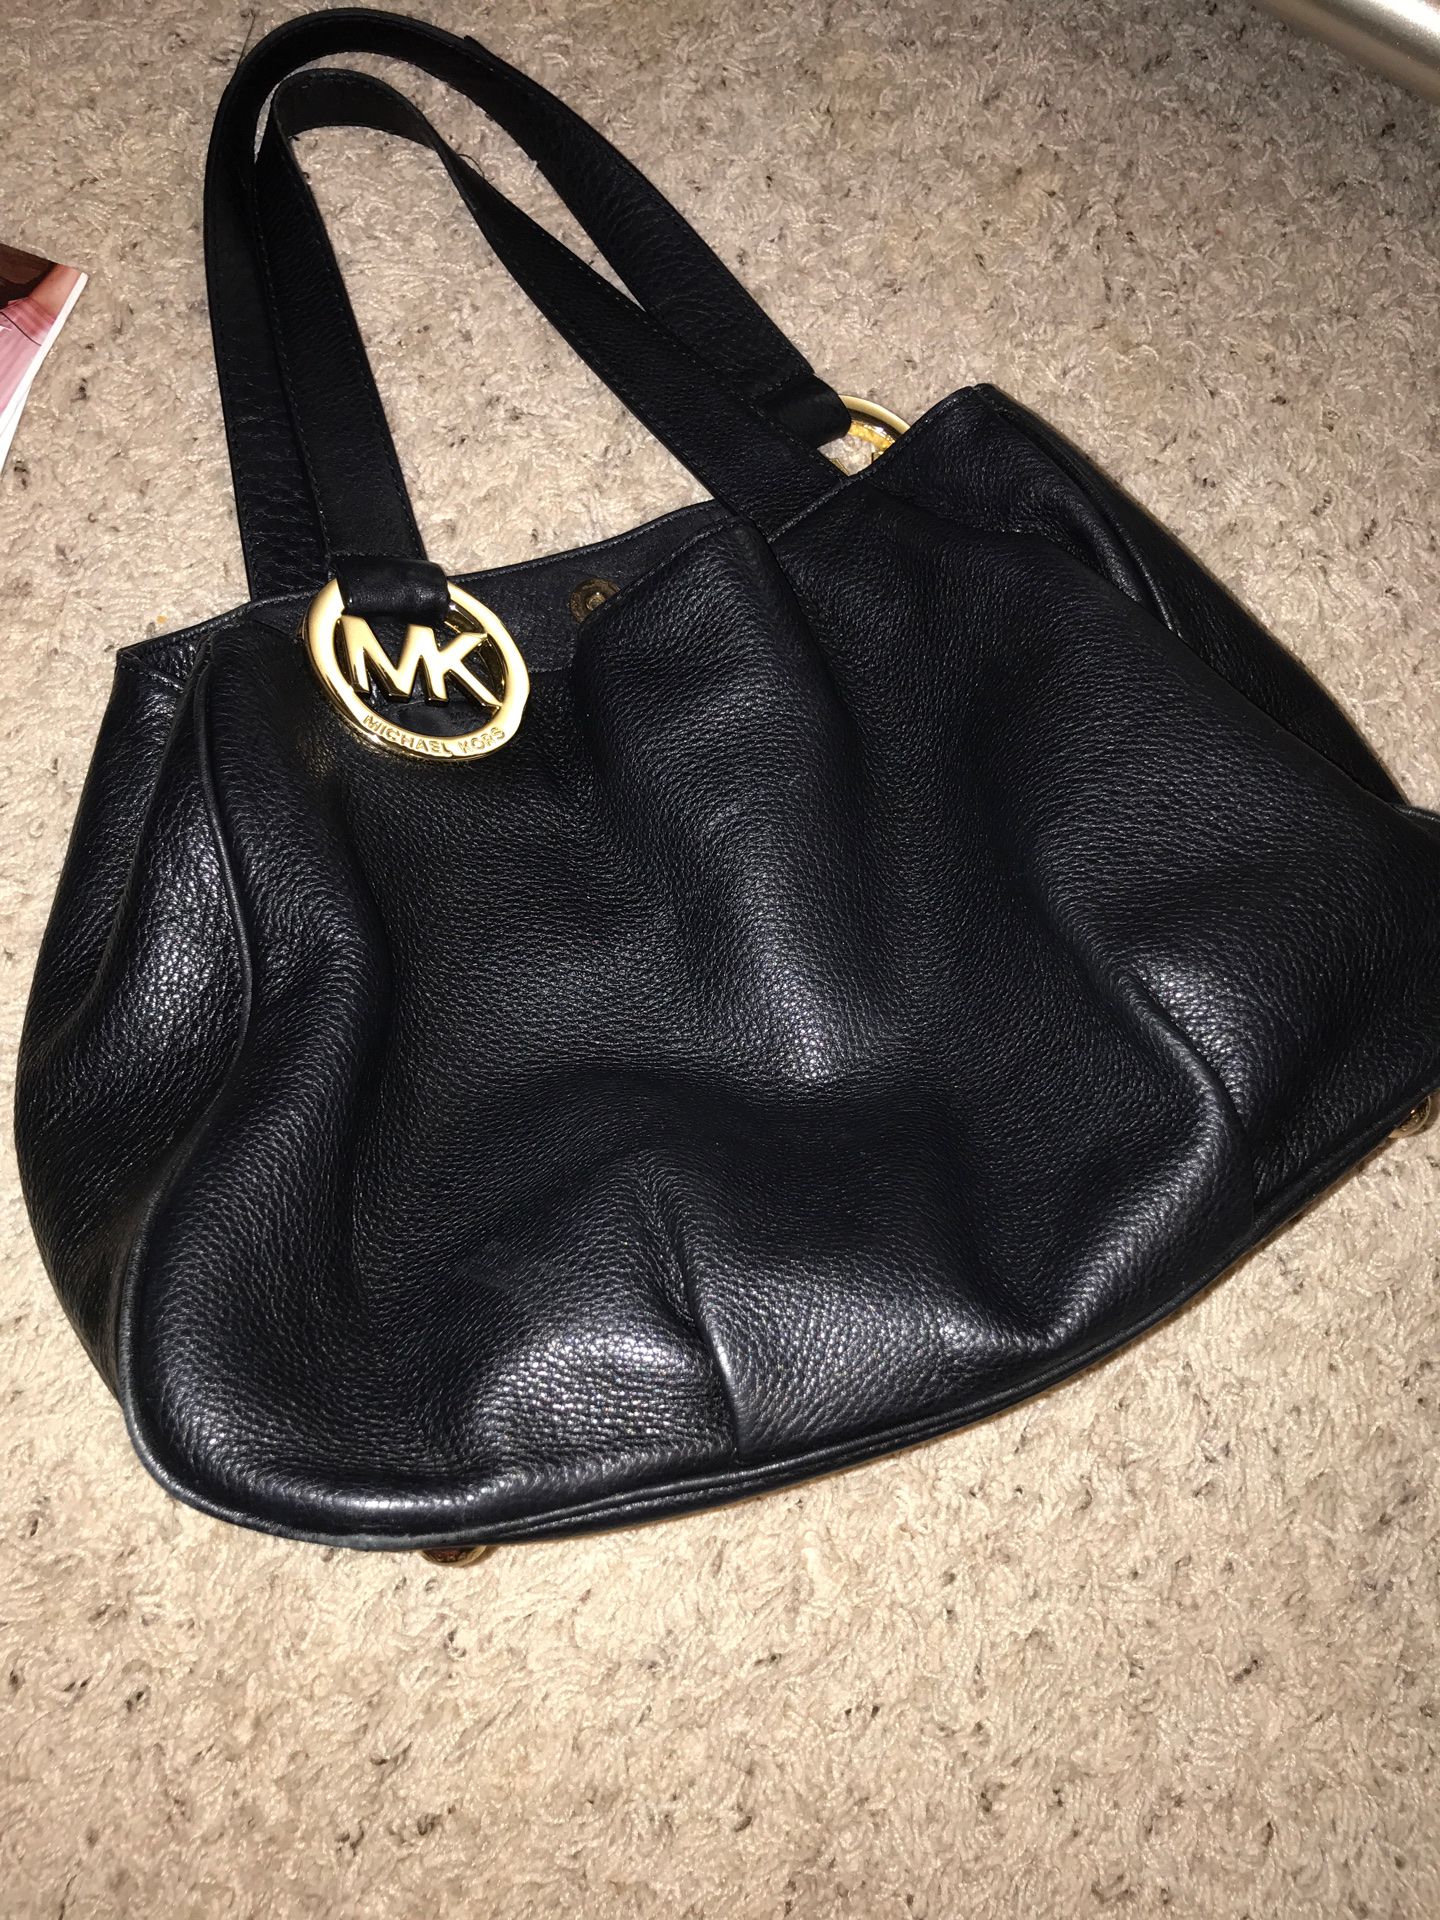 Michael Kors black leather women’s purse